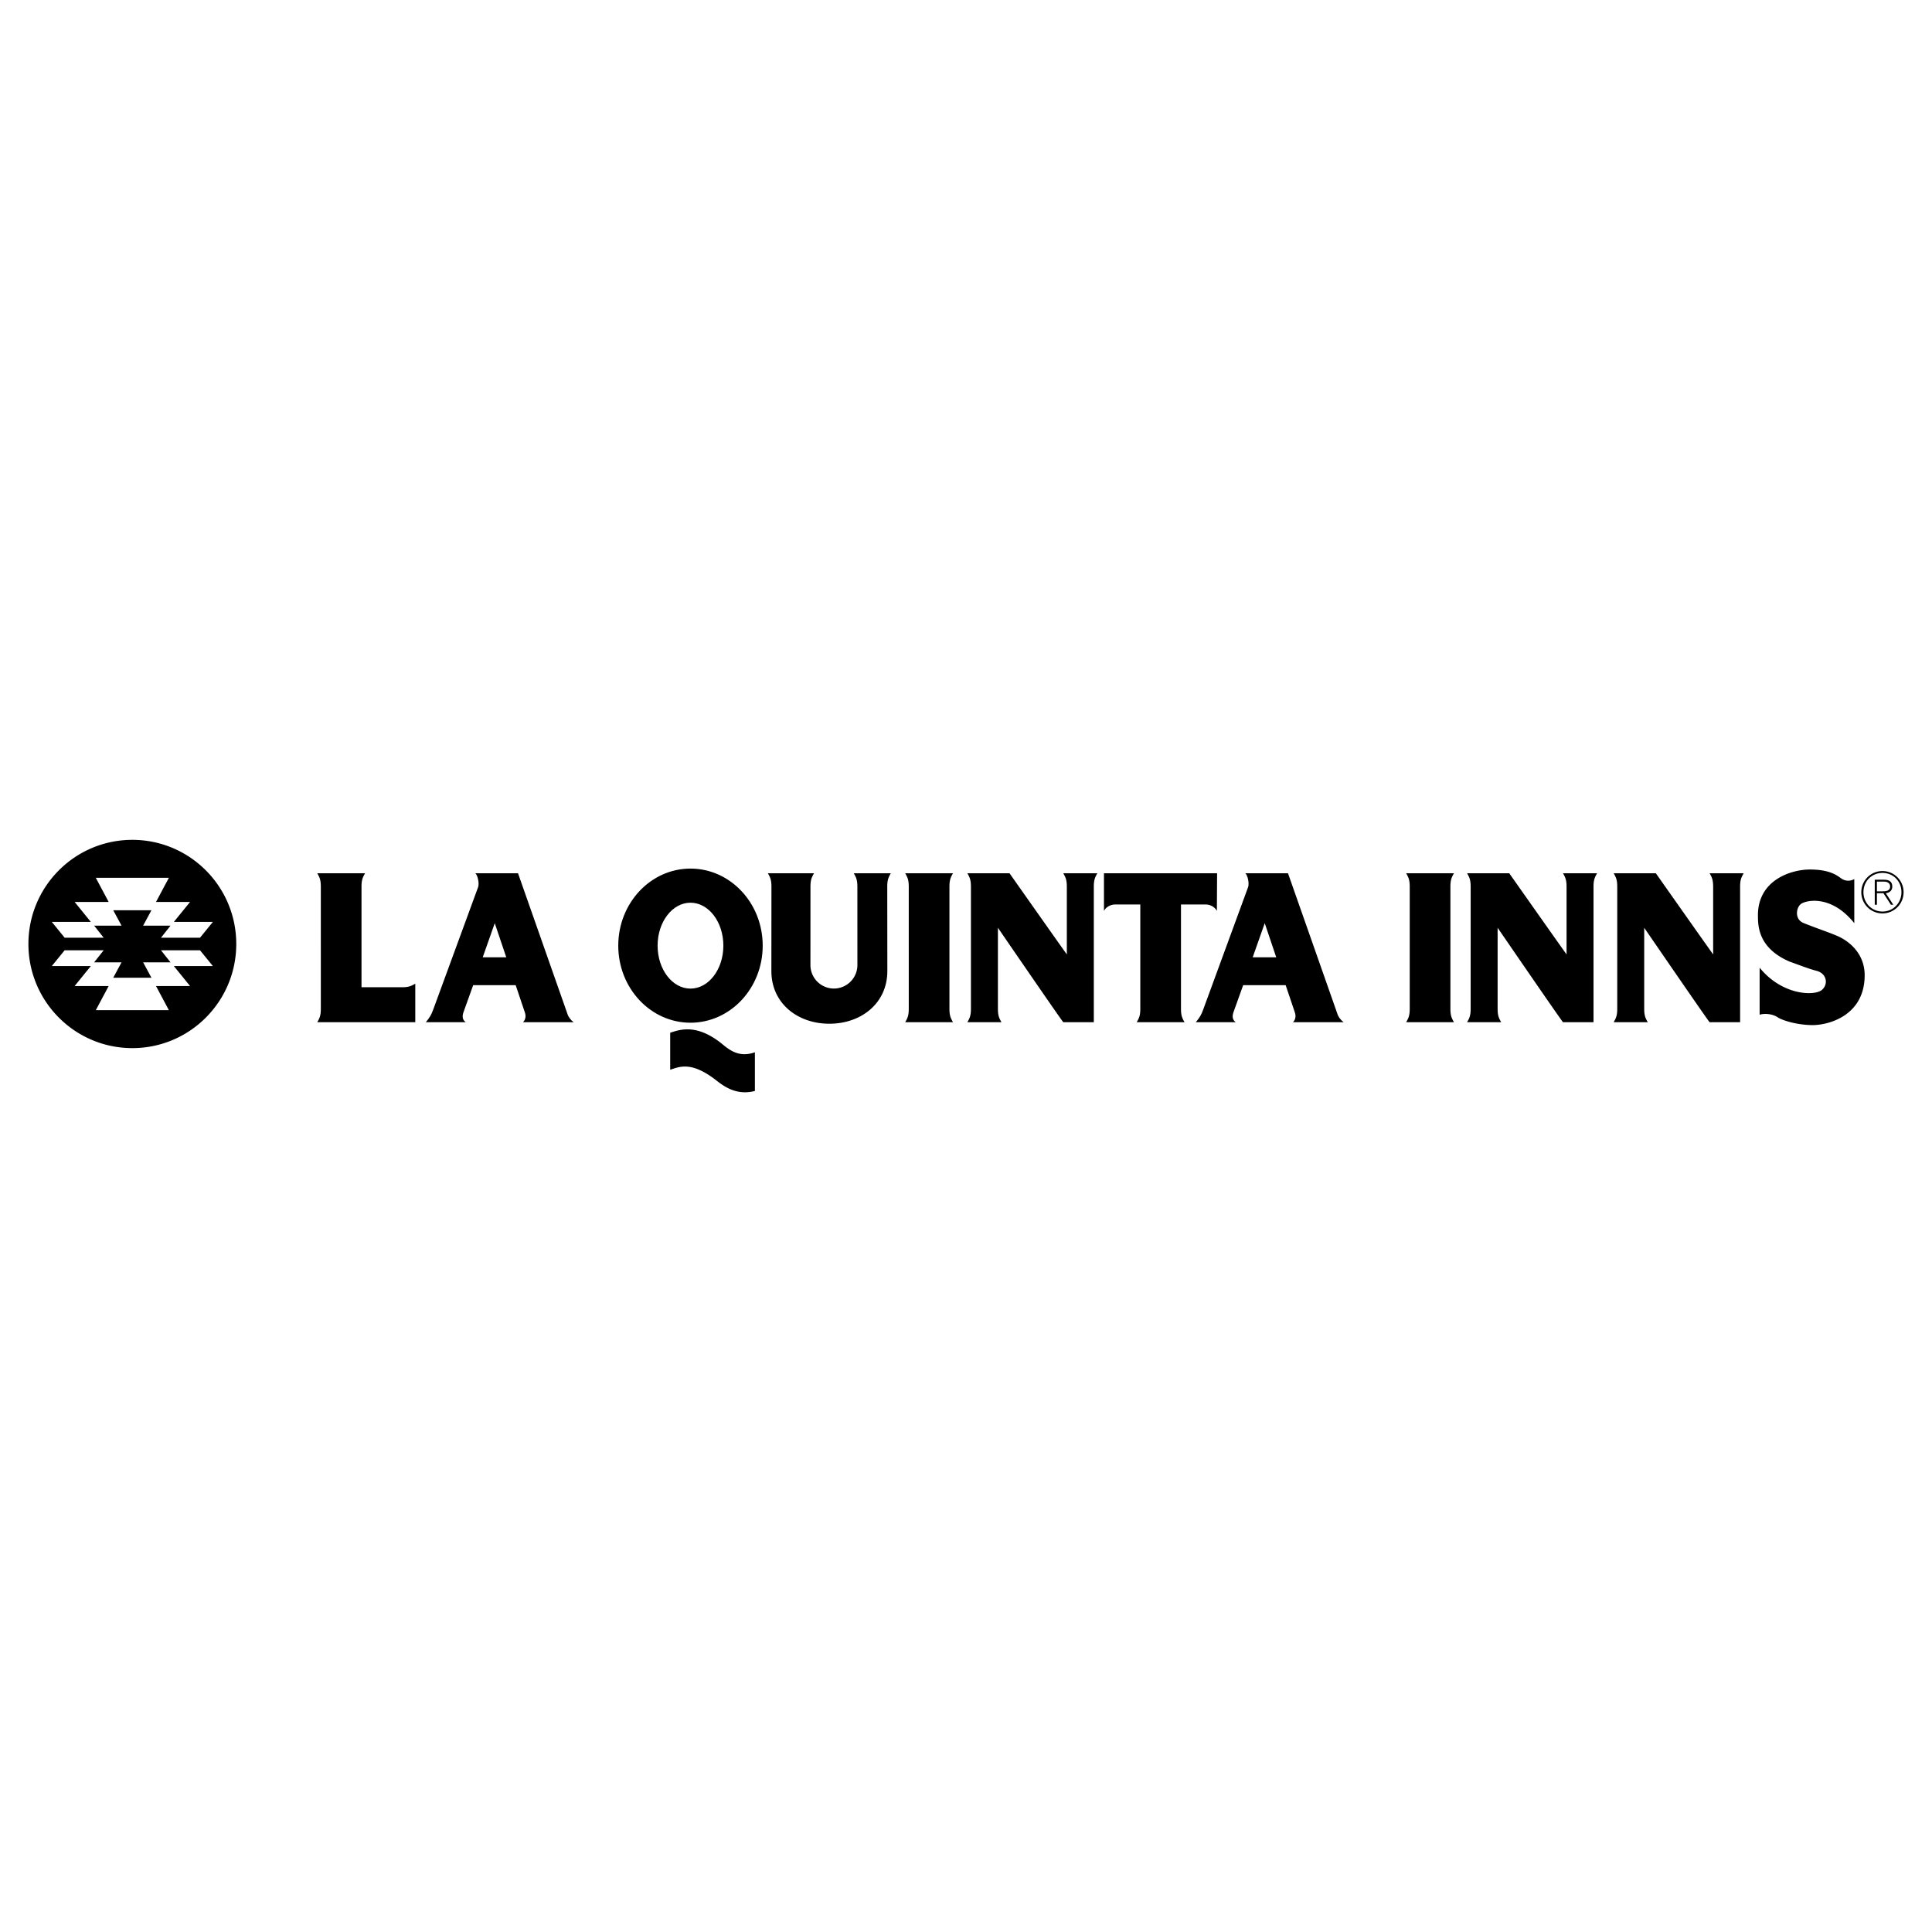 La Quinta Inns & Suites logo colors